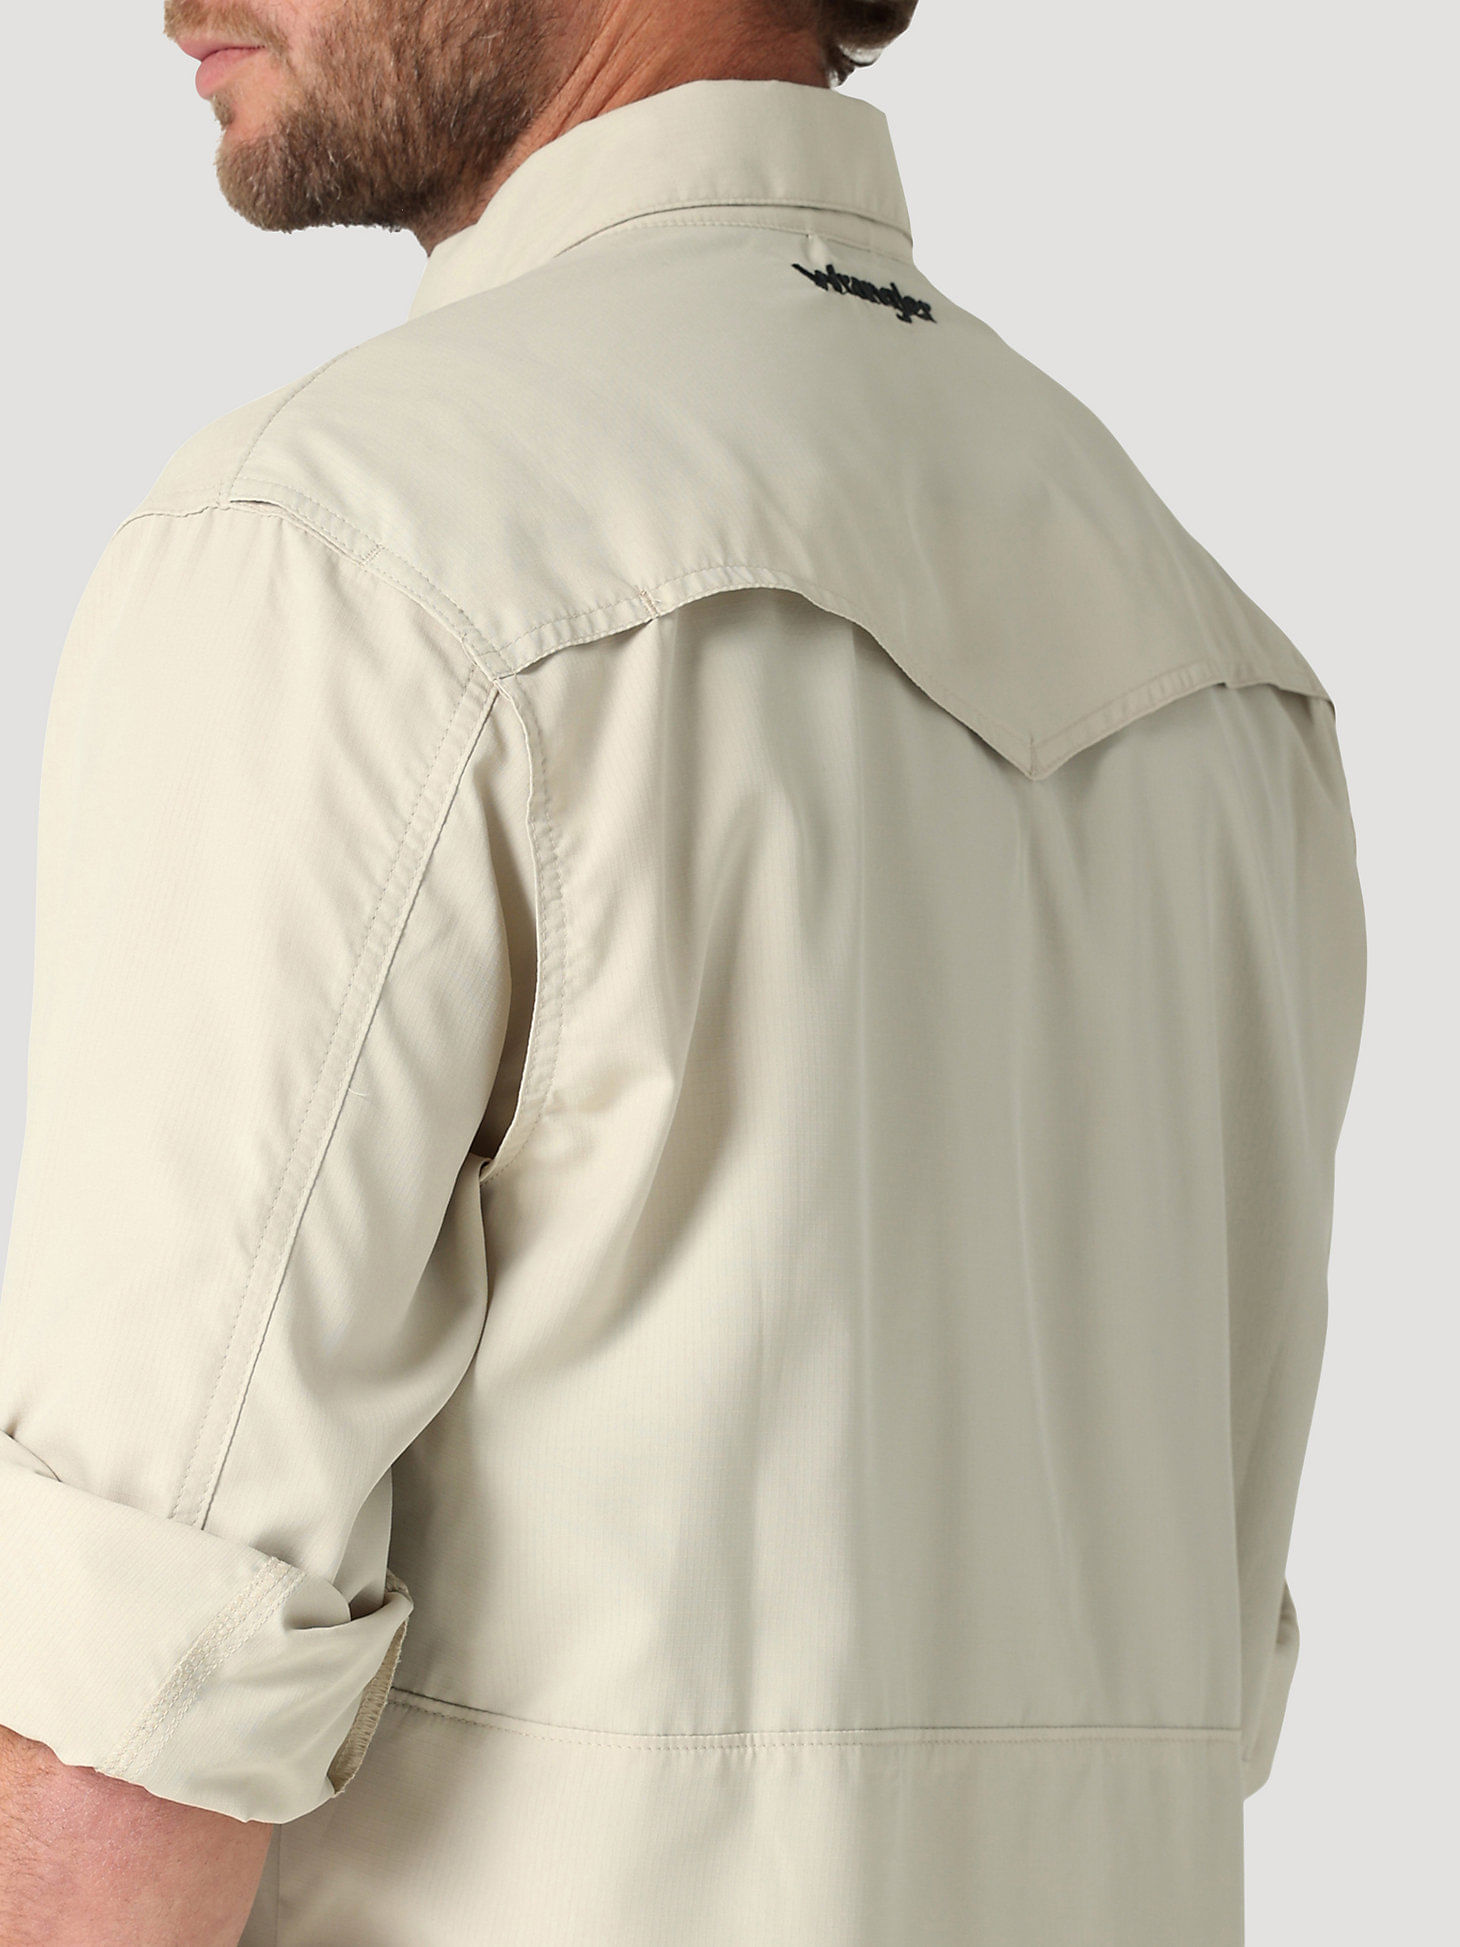 Wrangler Men's Performance Snap Long Sleeve Solid Khaki Work Shirt